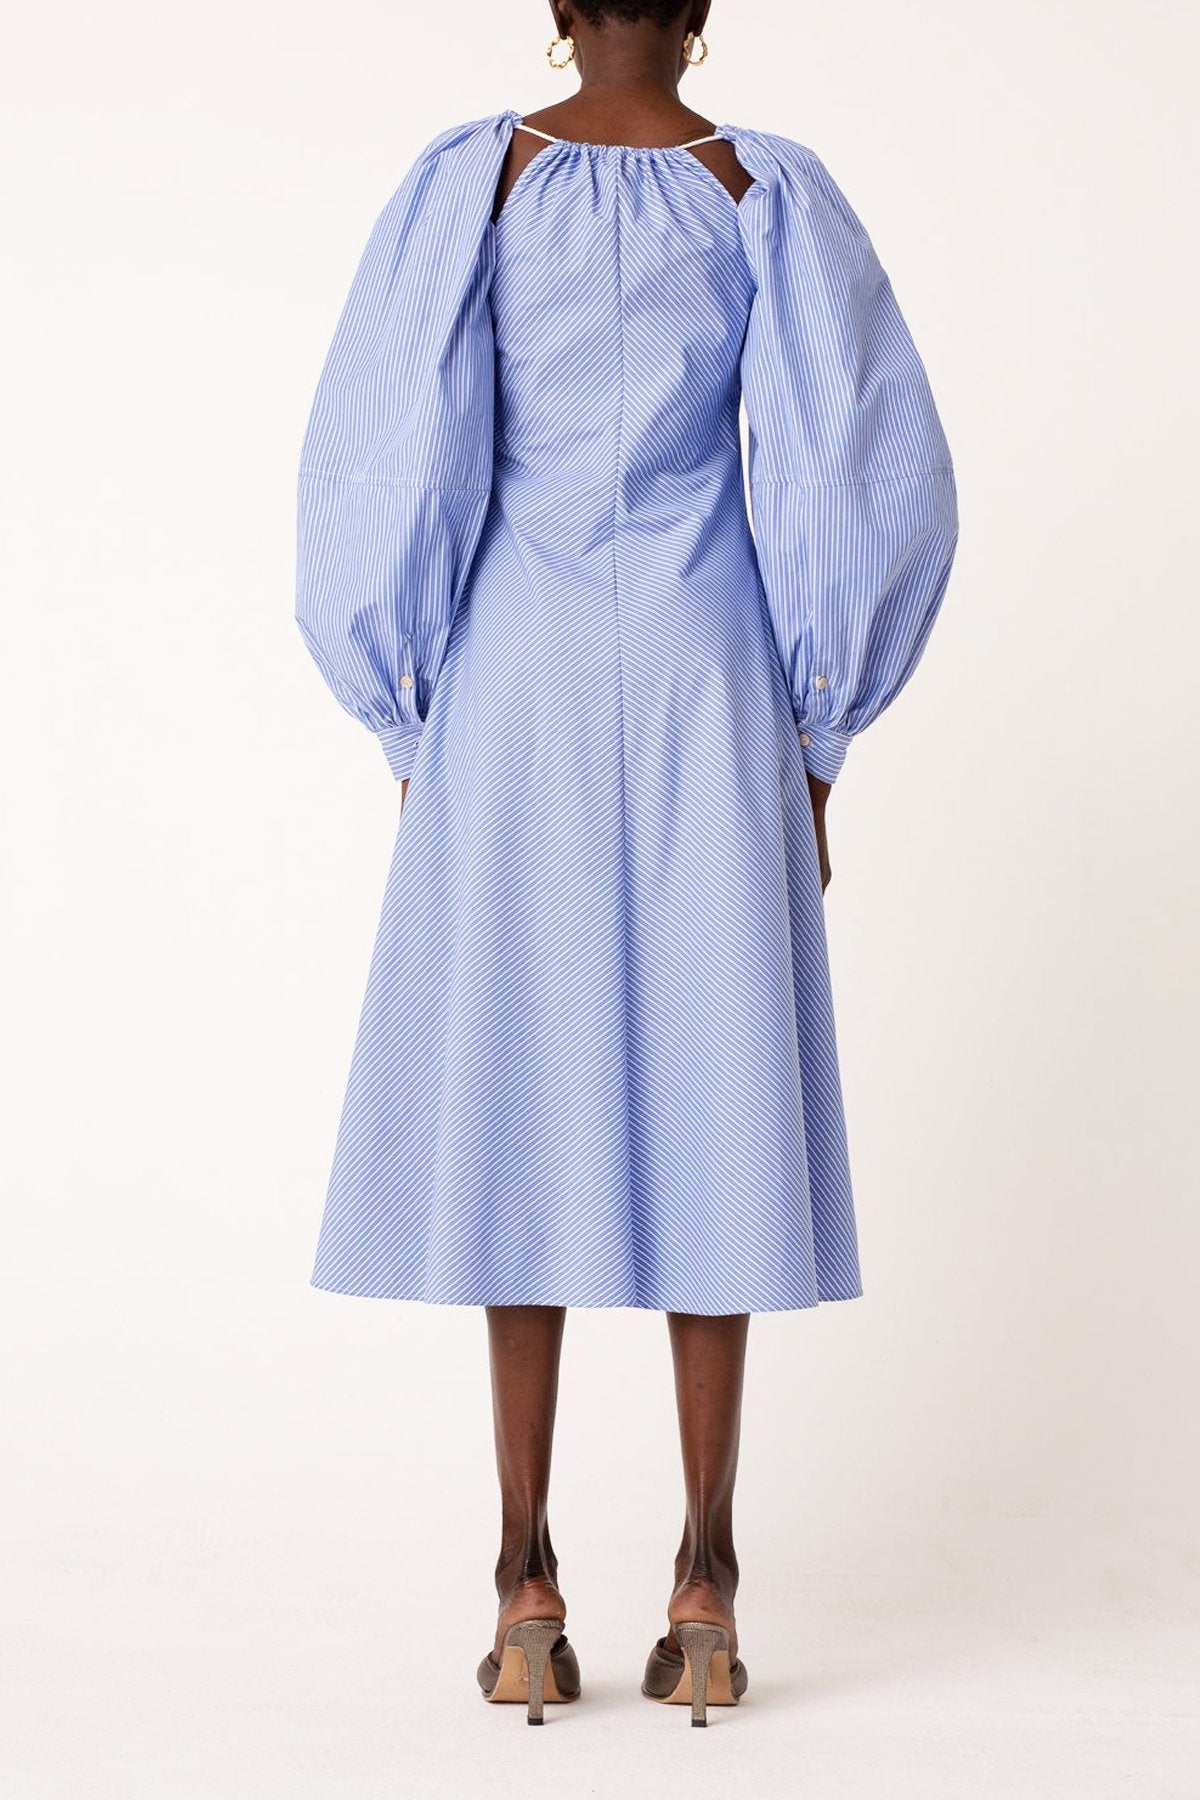 Entwine Dress in Blue Stripe - shop-olivia.com